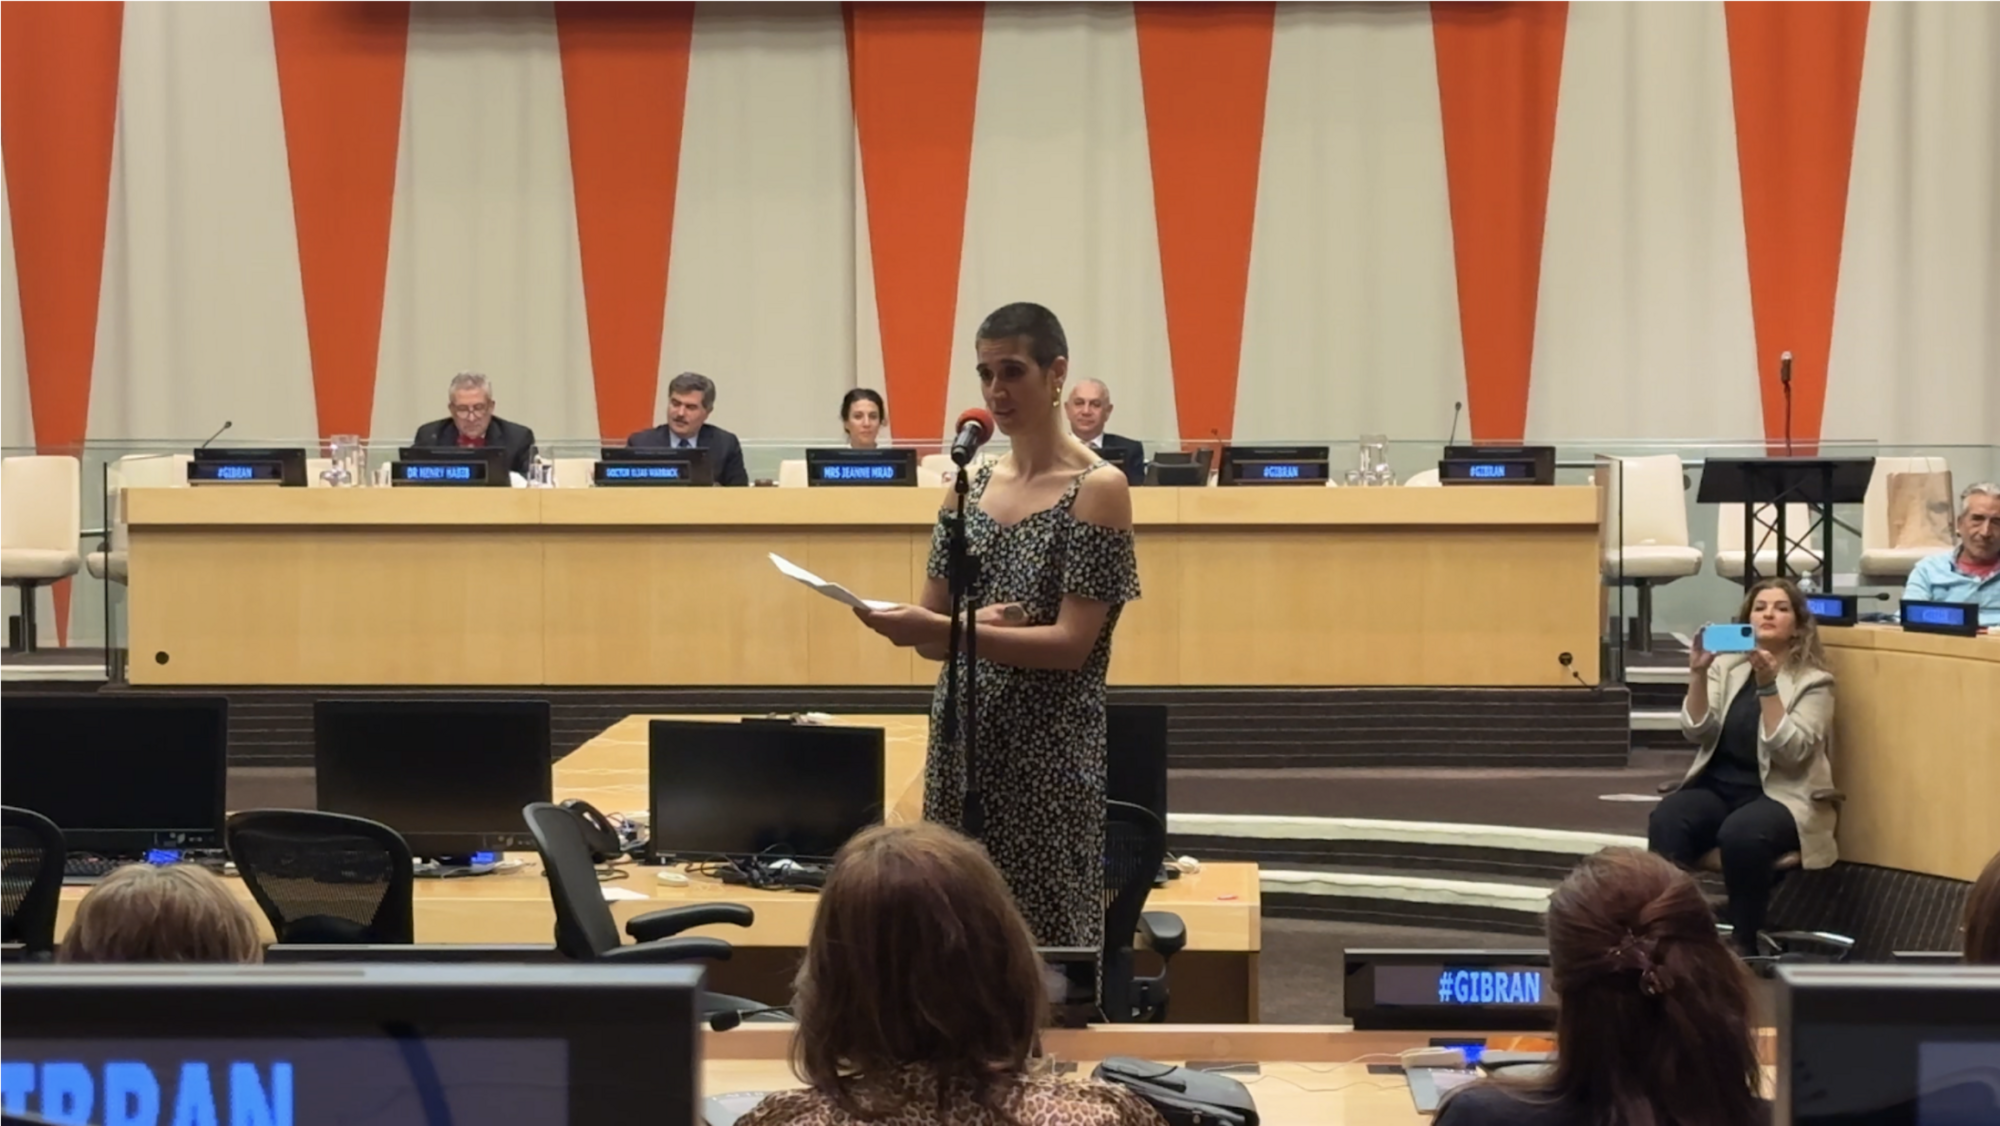 Sarah Bitar performs at the UN headquarters in New York